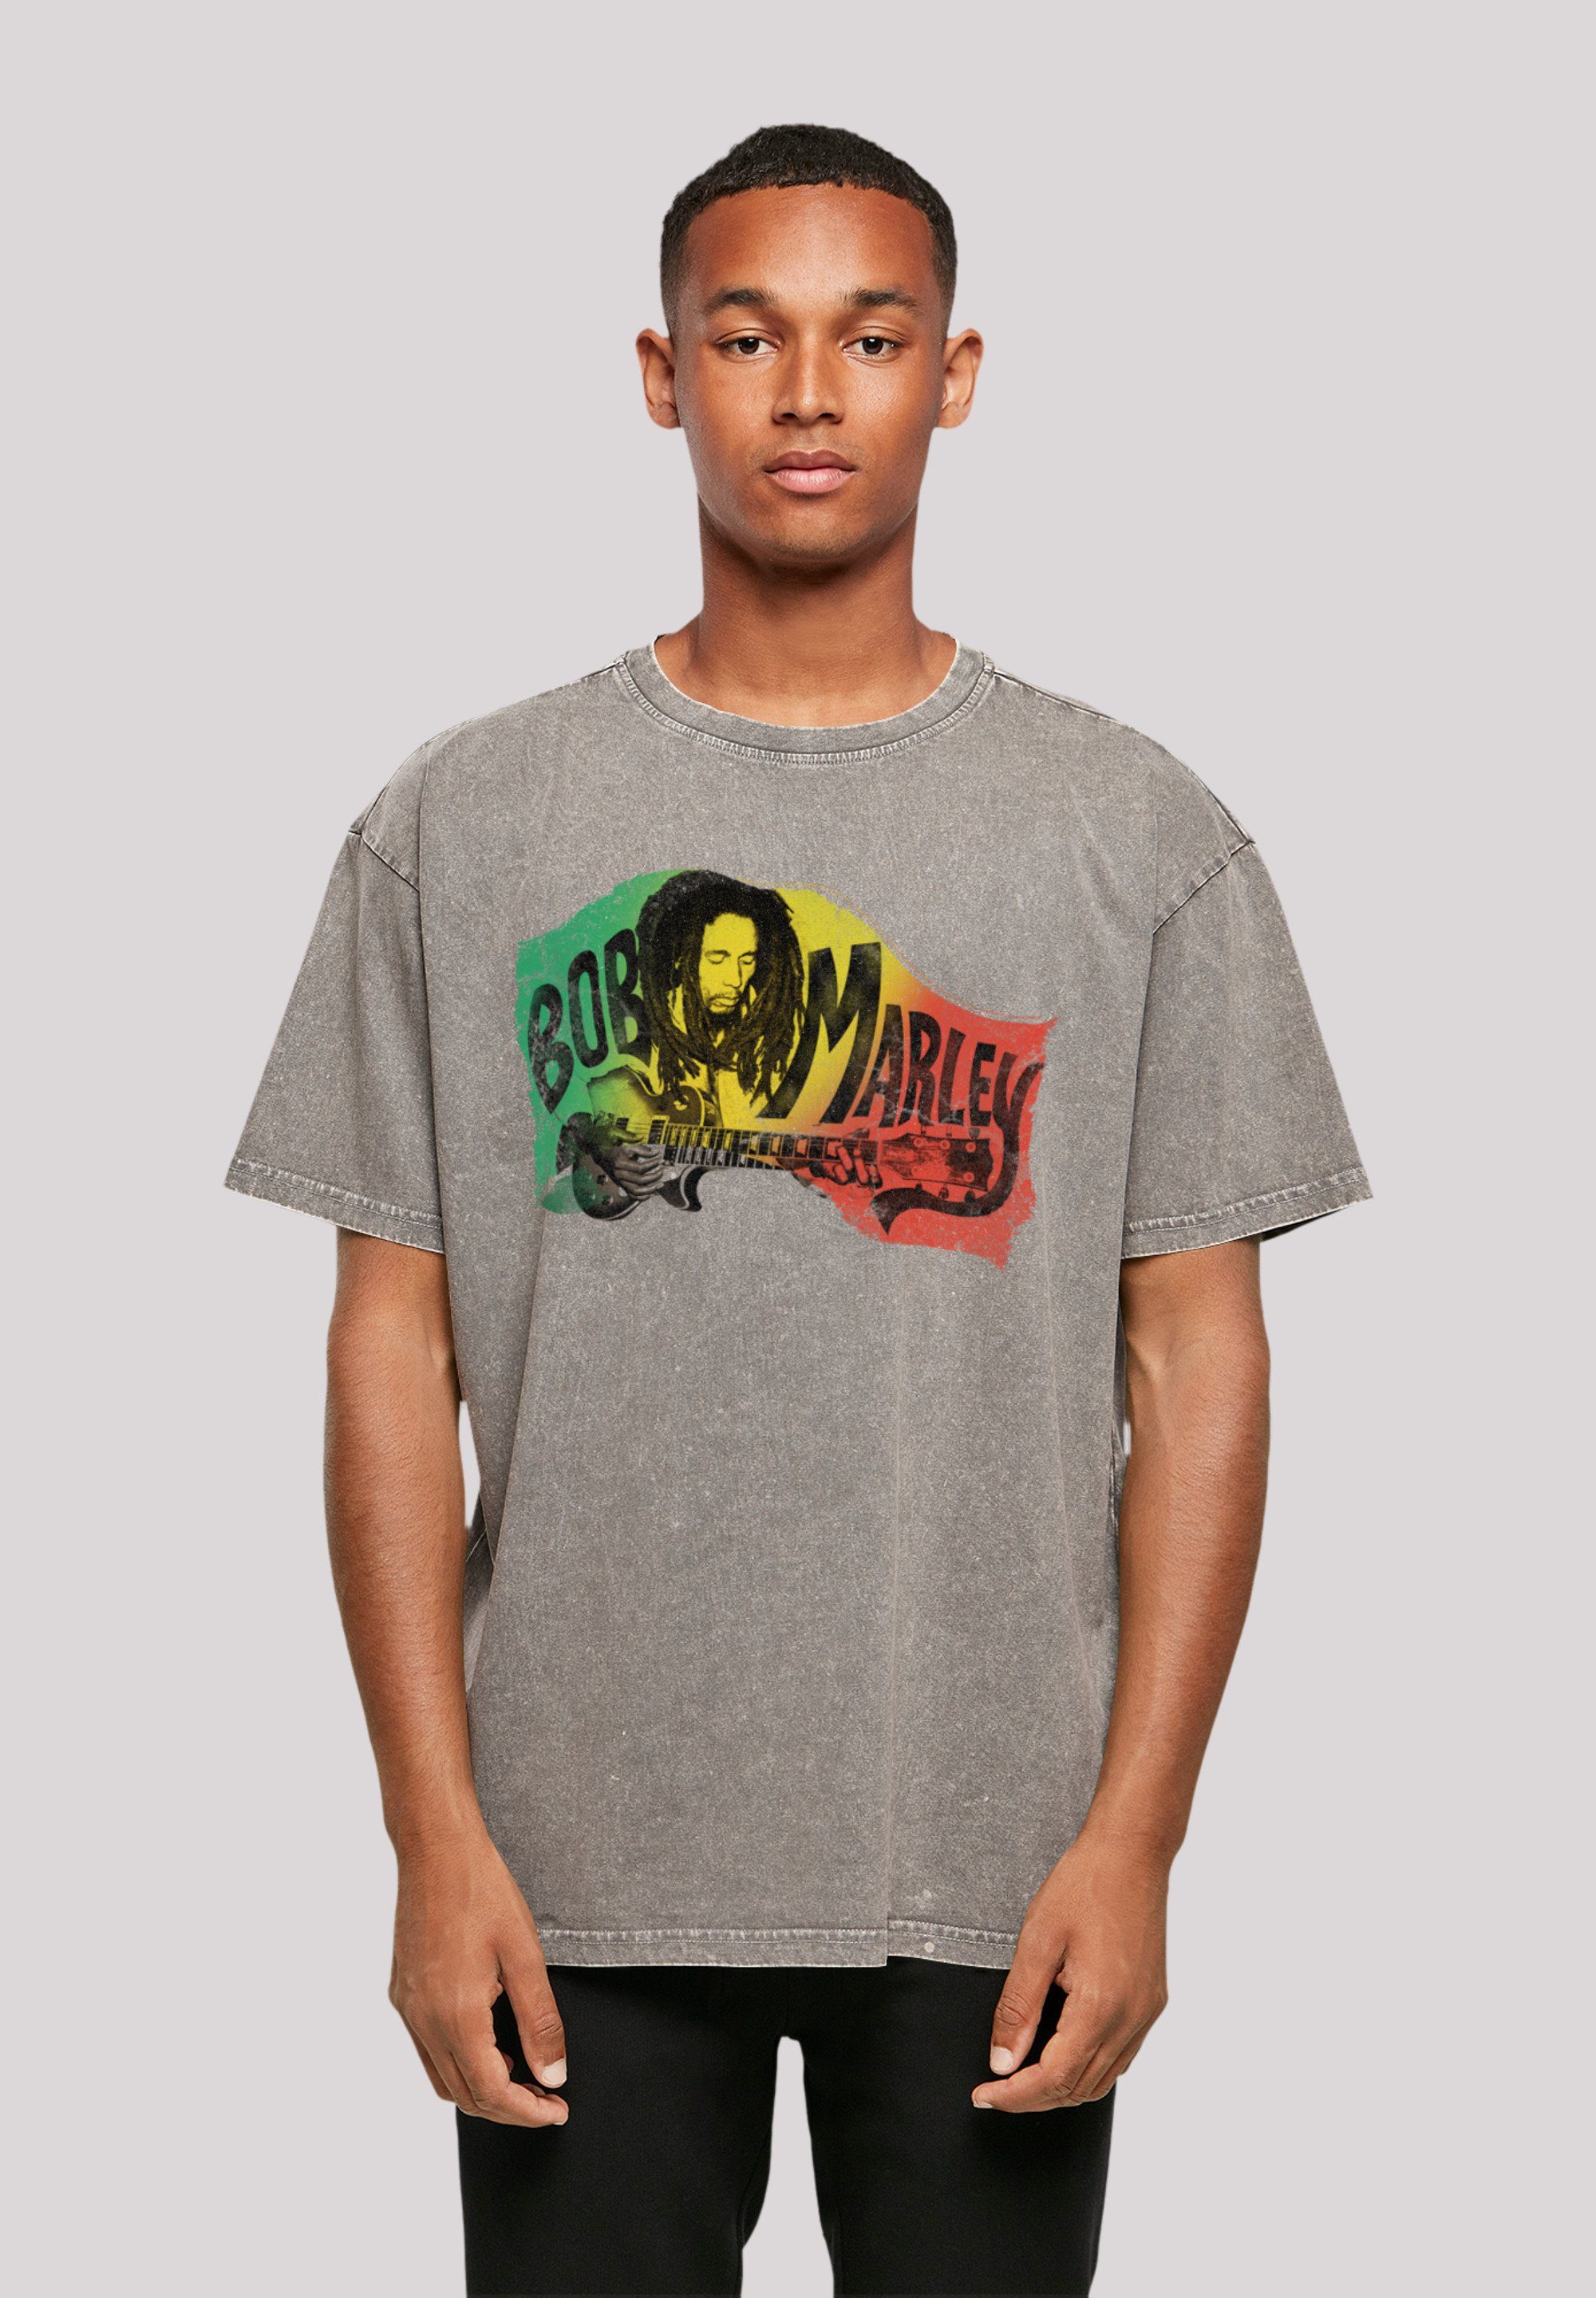 F4NT4STIC T-Shirt Bob Marley Chords Reggae Music Premium Qualität, Musik, By Rock Off Asphalt